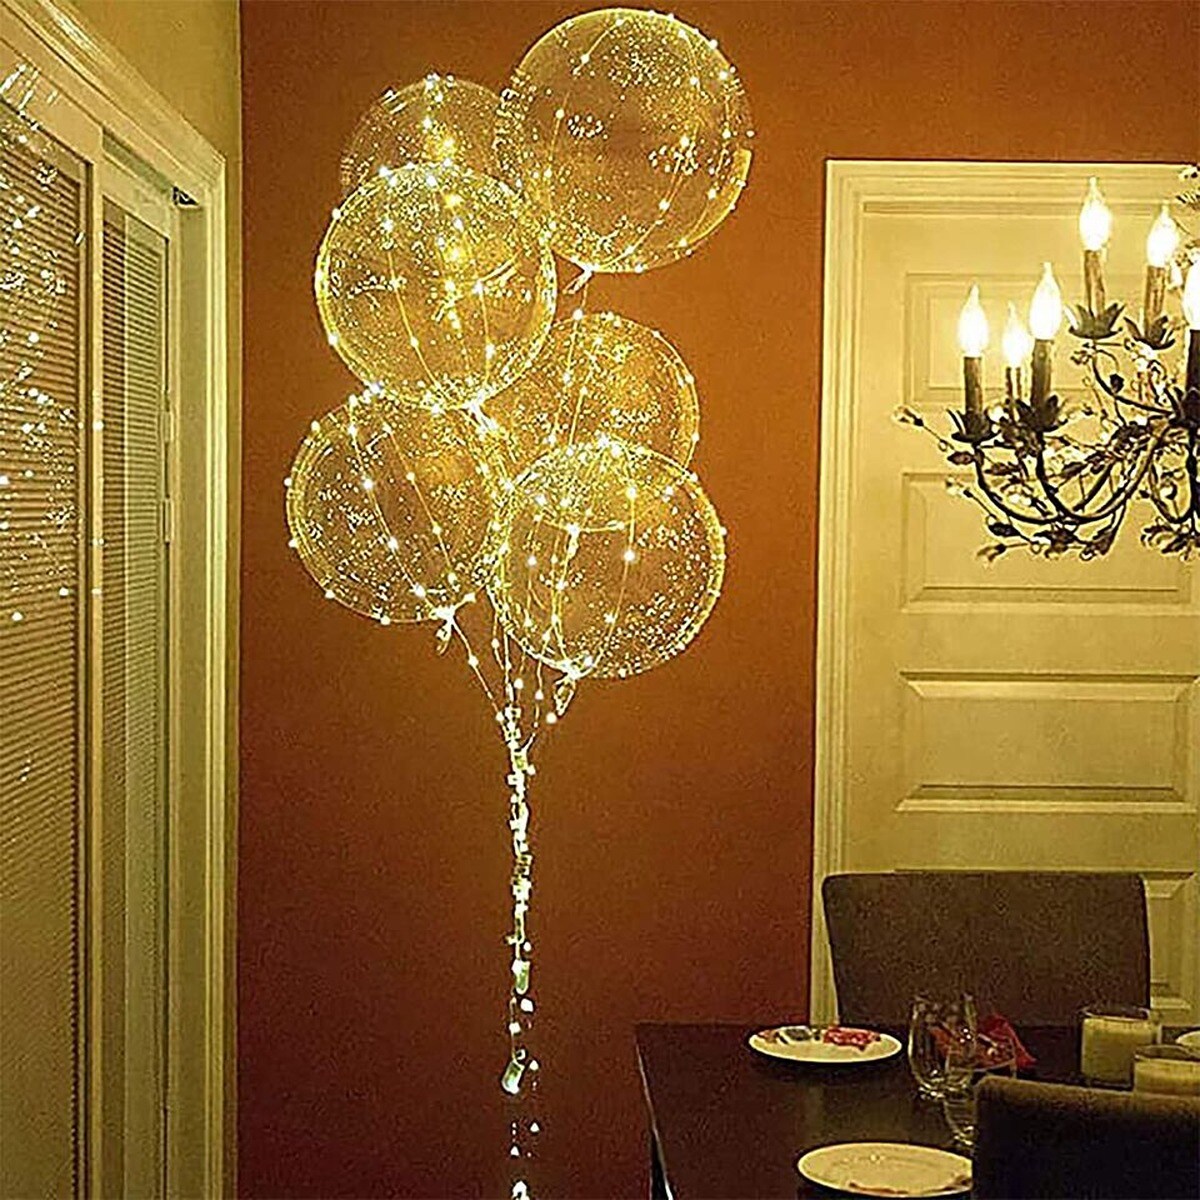 Transparent LED Light Up Balloons 12 packs